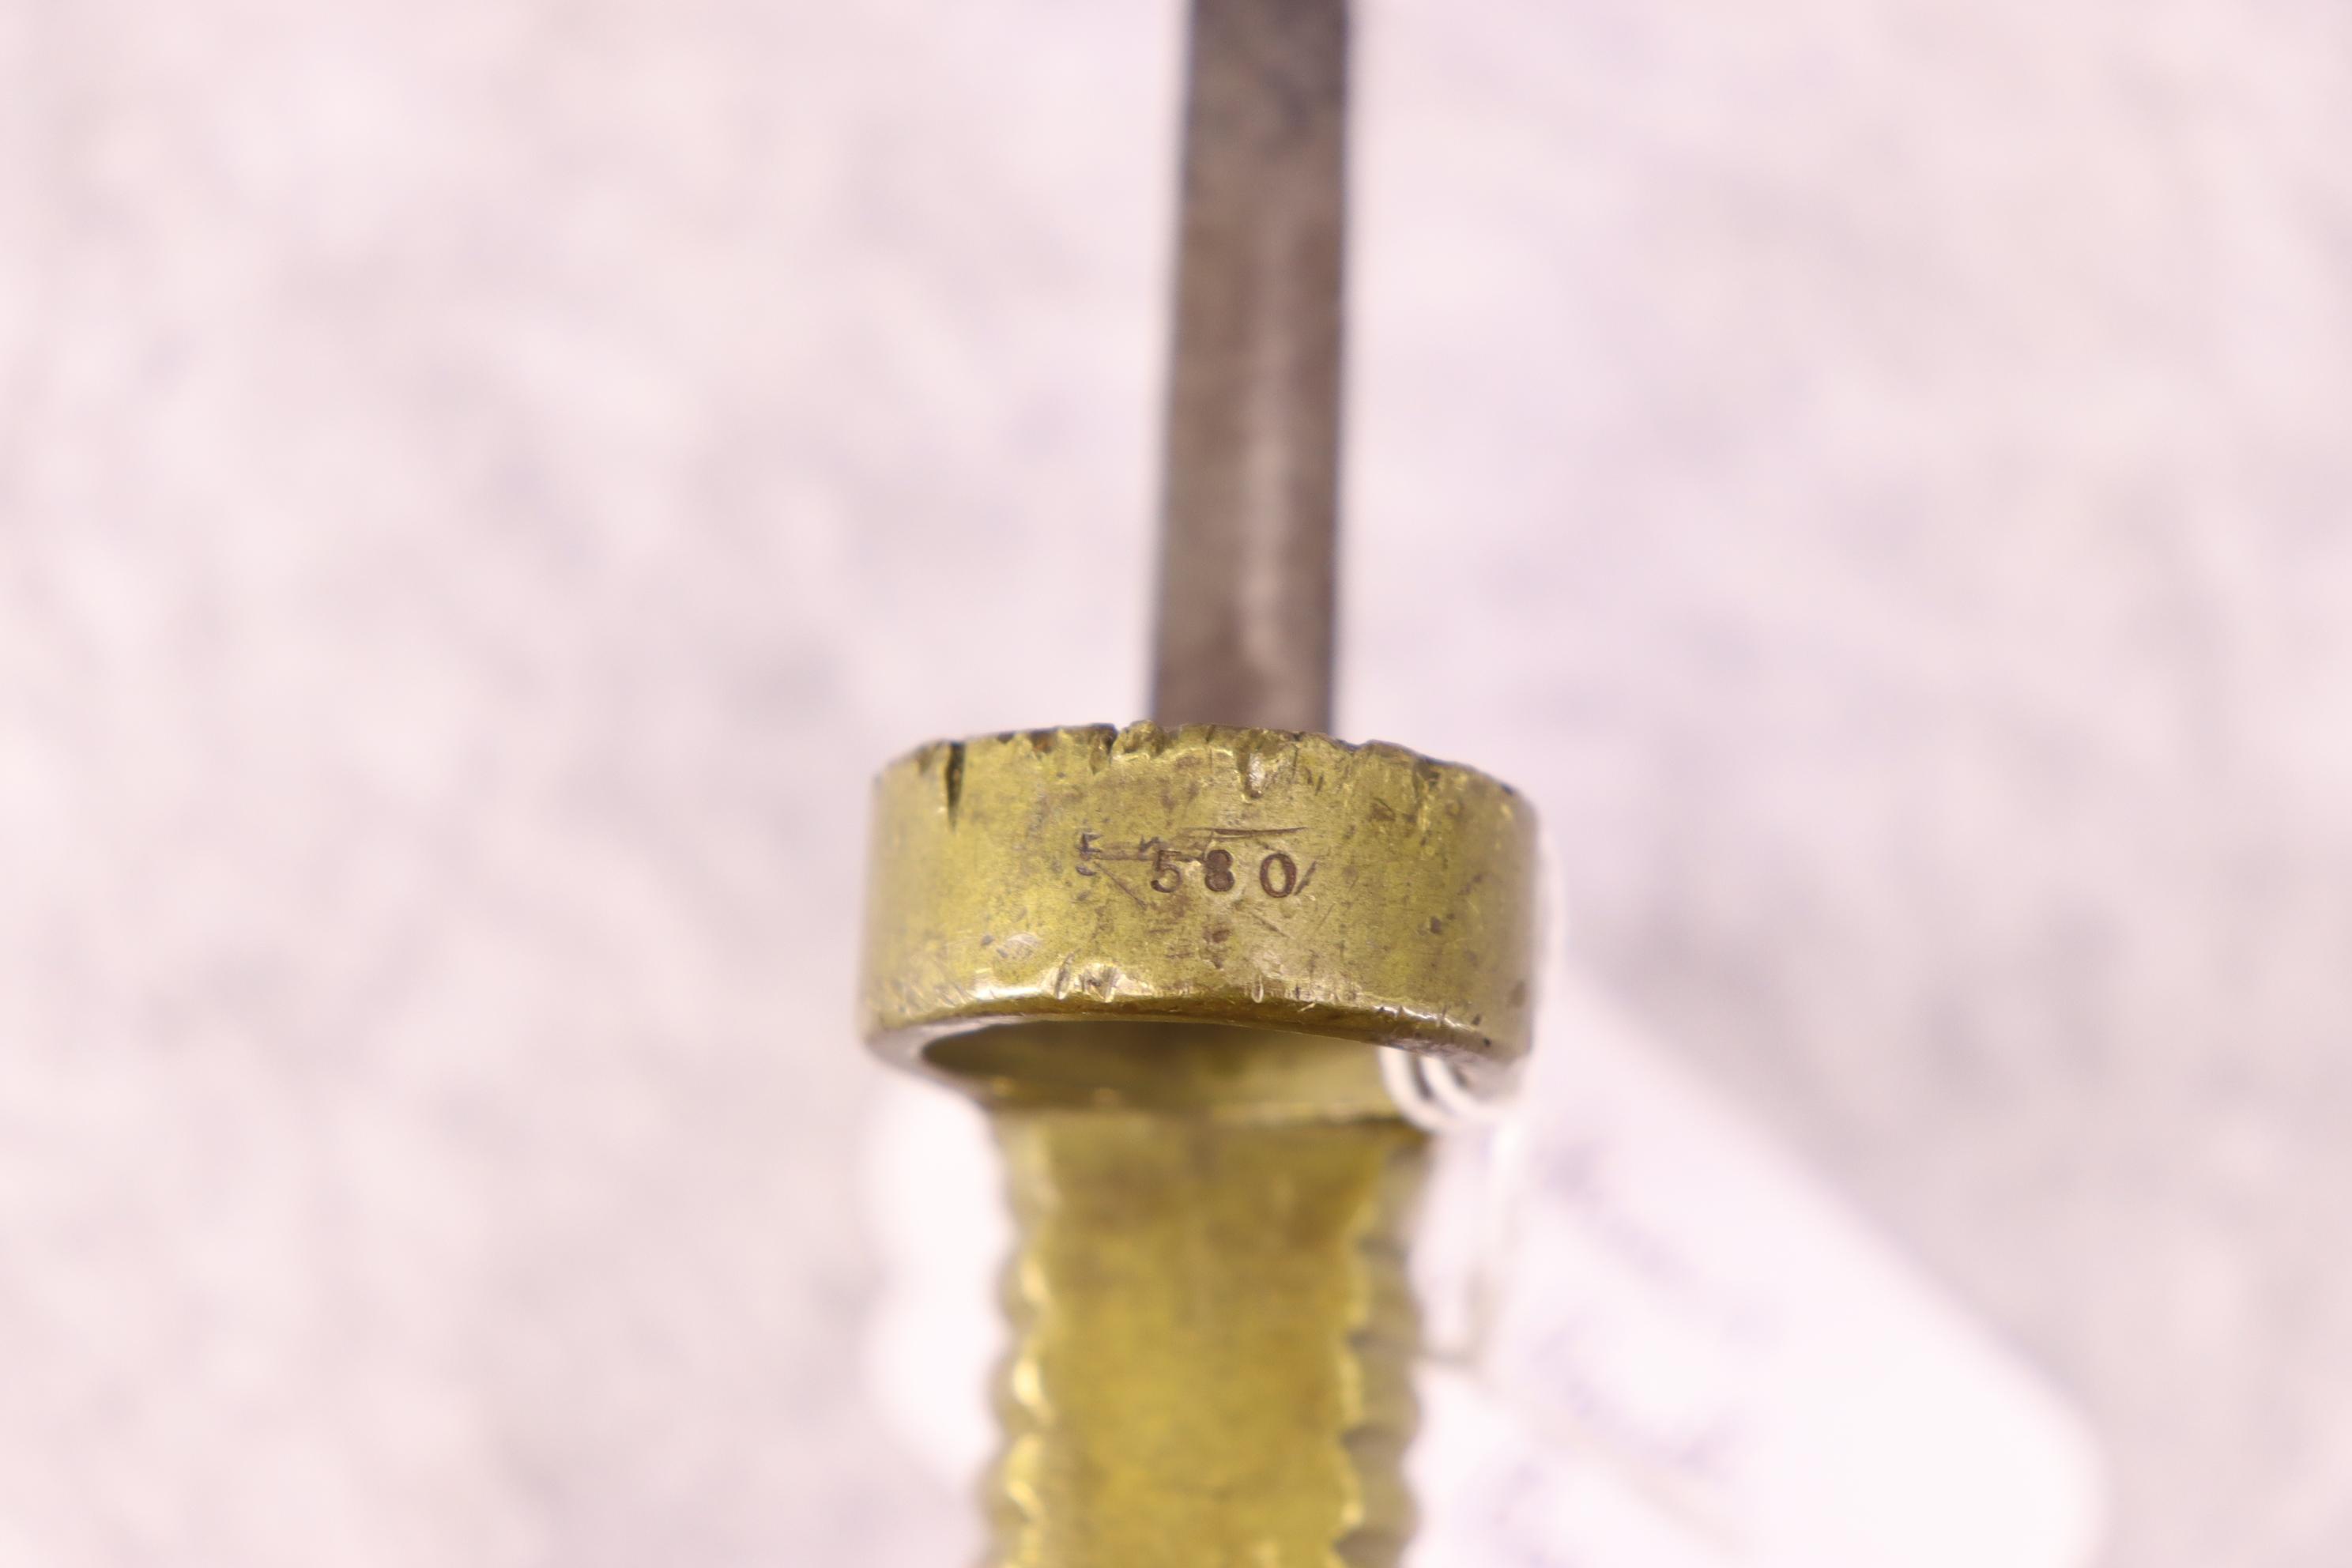 Unknown Brass Handle Saber Bayonet w/no Markings